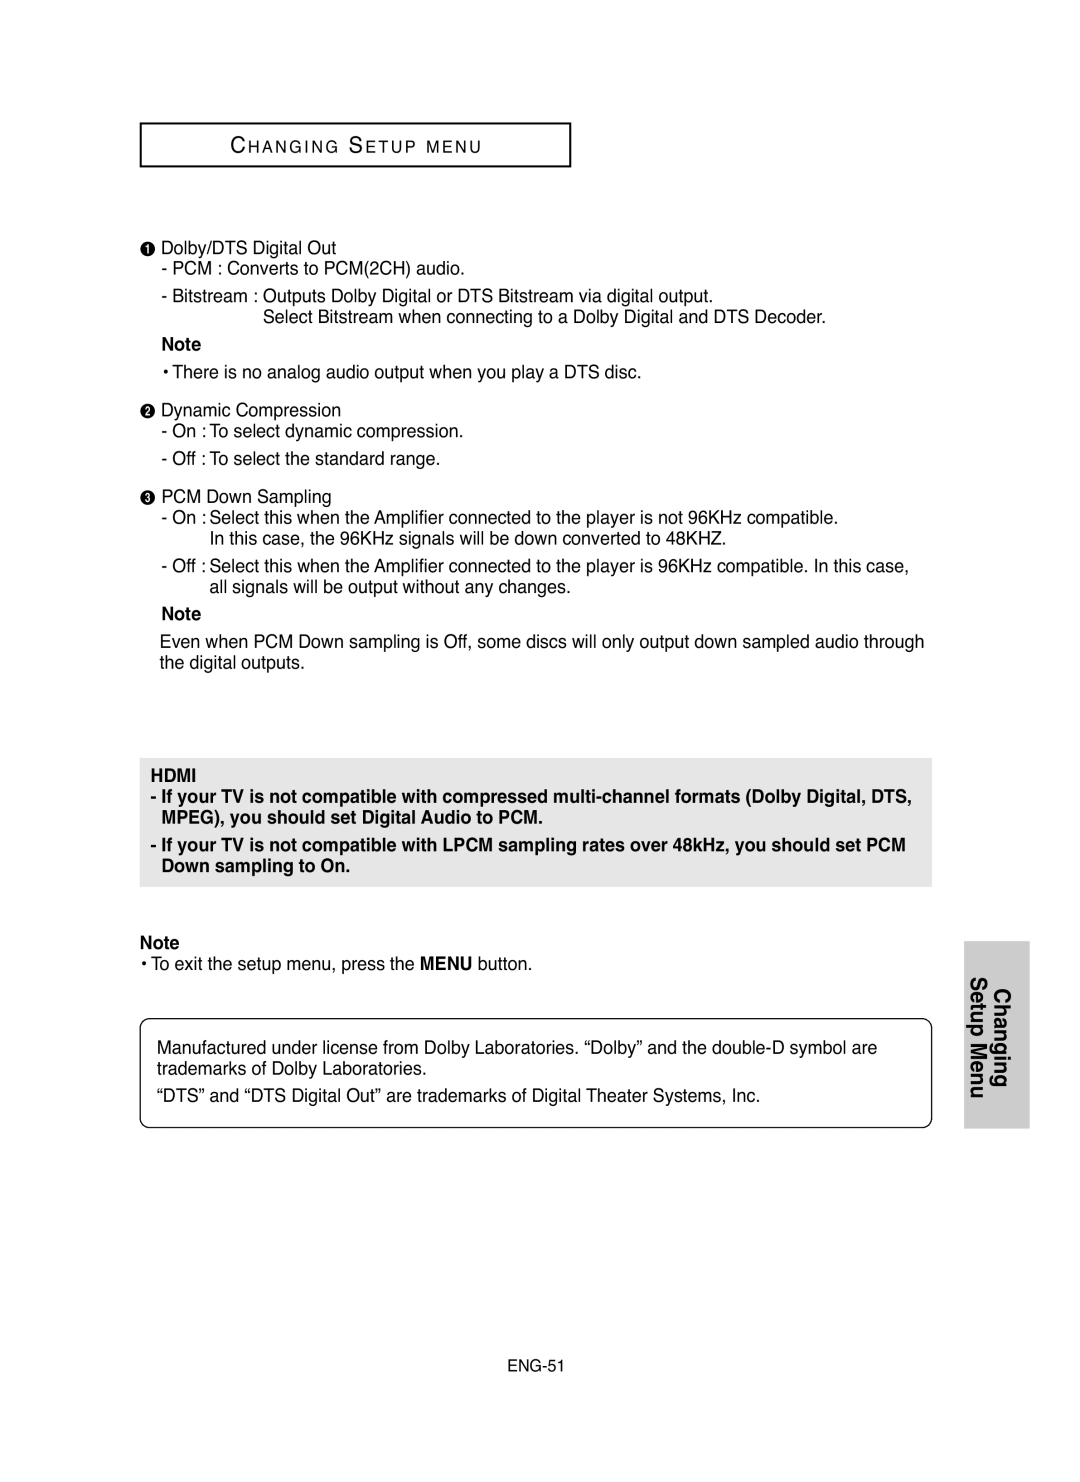 Samsung DVD-HD755 manual Changing Setup Menu, Hdmi 